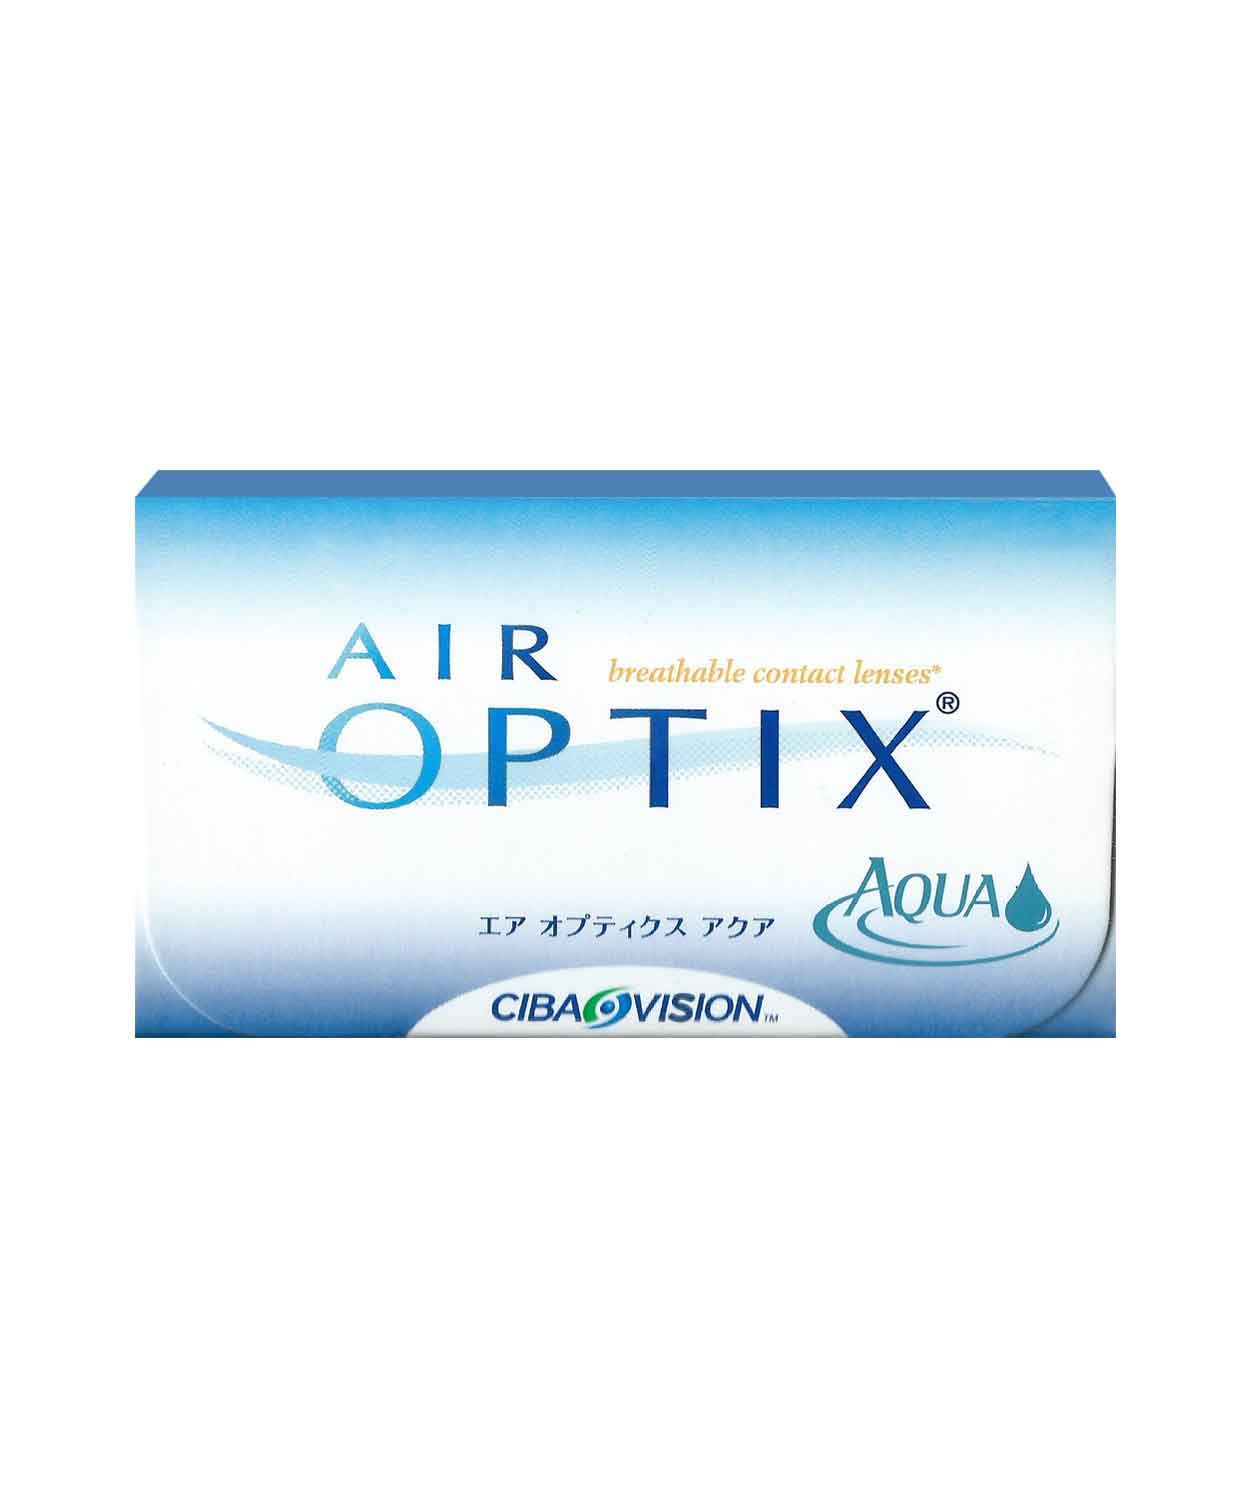 review-ciba-vision-air-optix-aqua-contact-lens-singapore